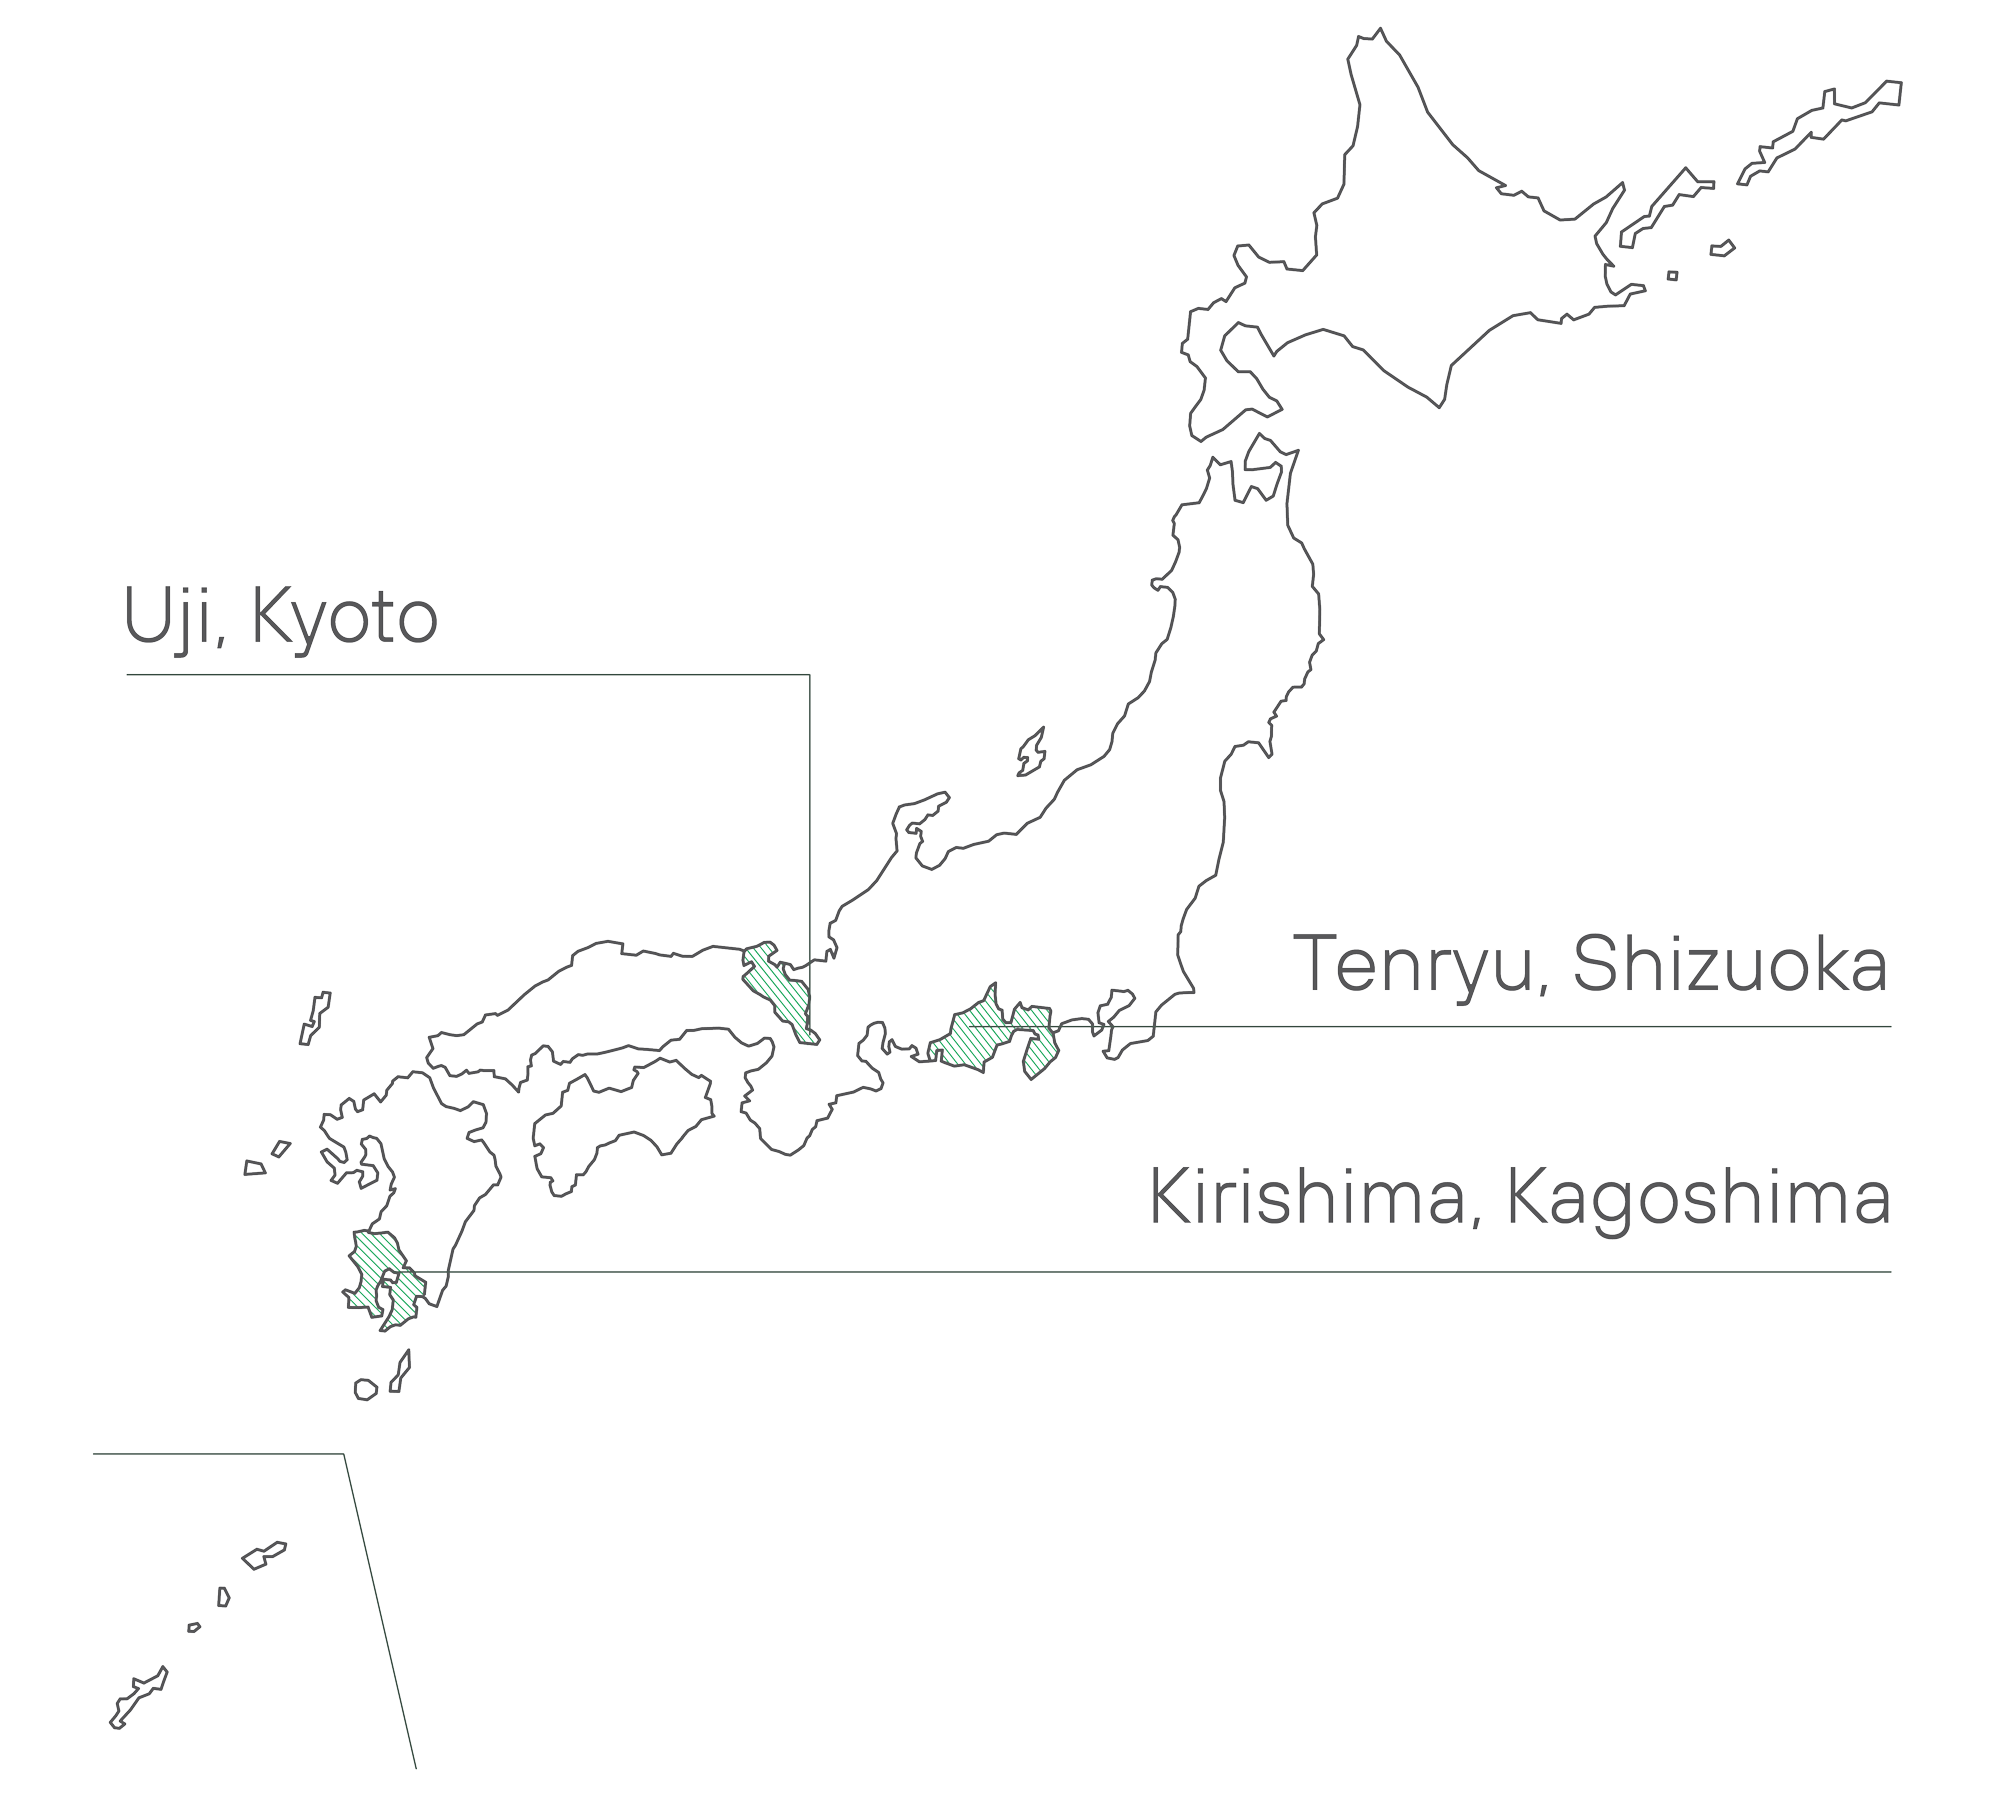 A map of Japan, showing where Cuzen Matcha’s Single Origin teas are sourced: Kyoto, Shizuoka, Kagoshima.